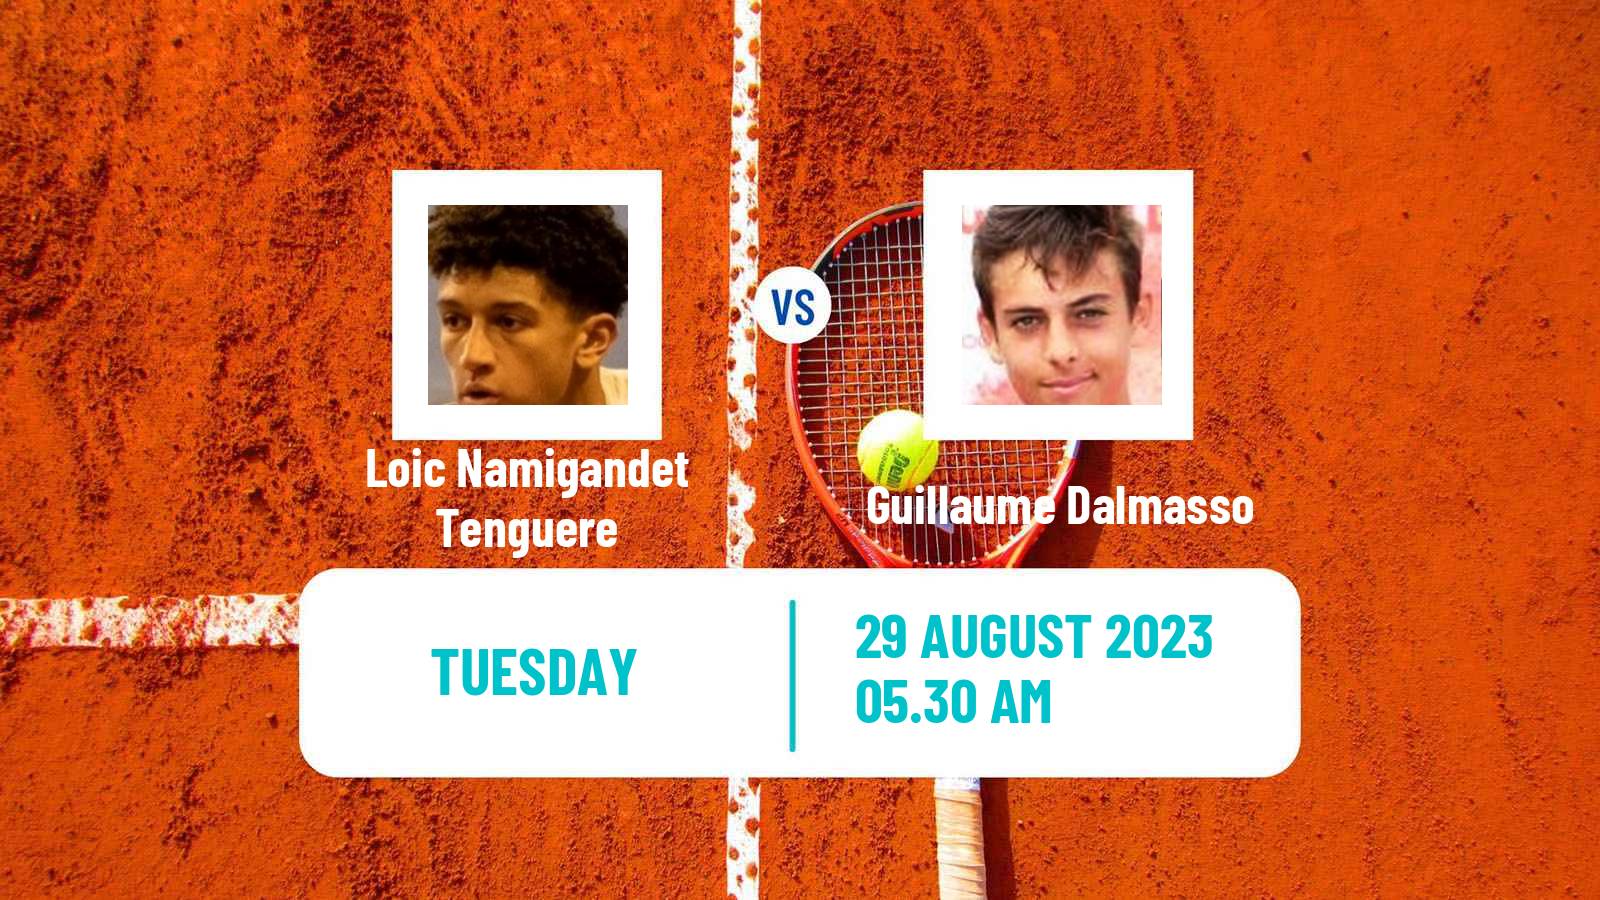 Tennis ITF M25 Idanha A Nova 2 Men Loic Namigandet Tenguere - Guillaume Dalmasso